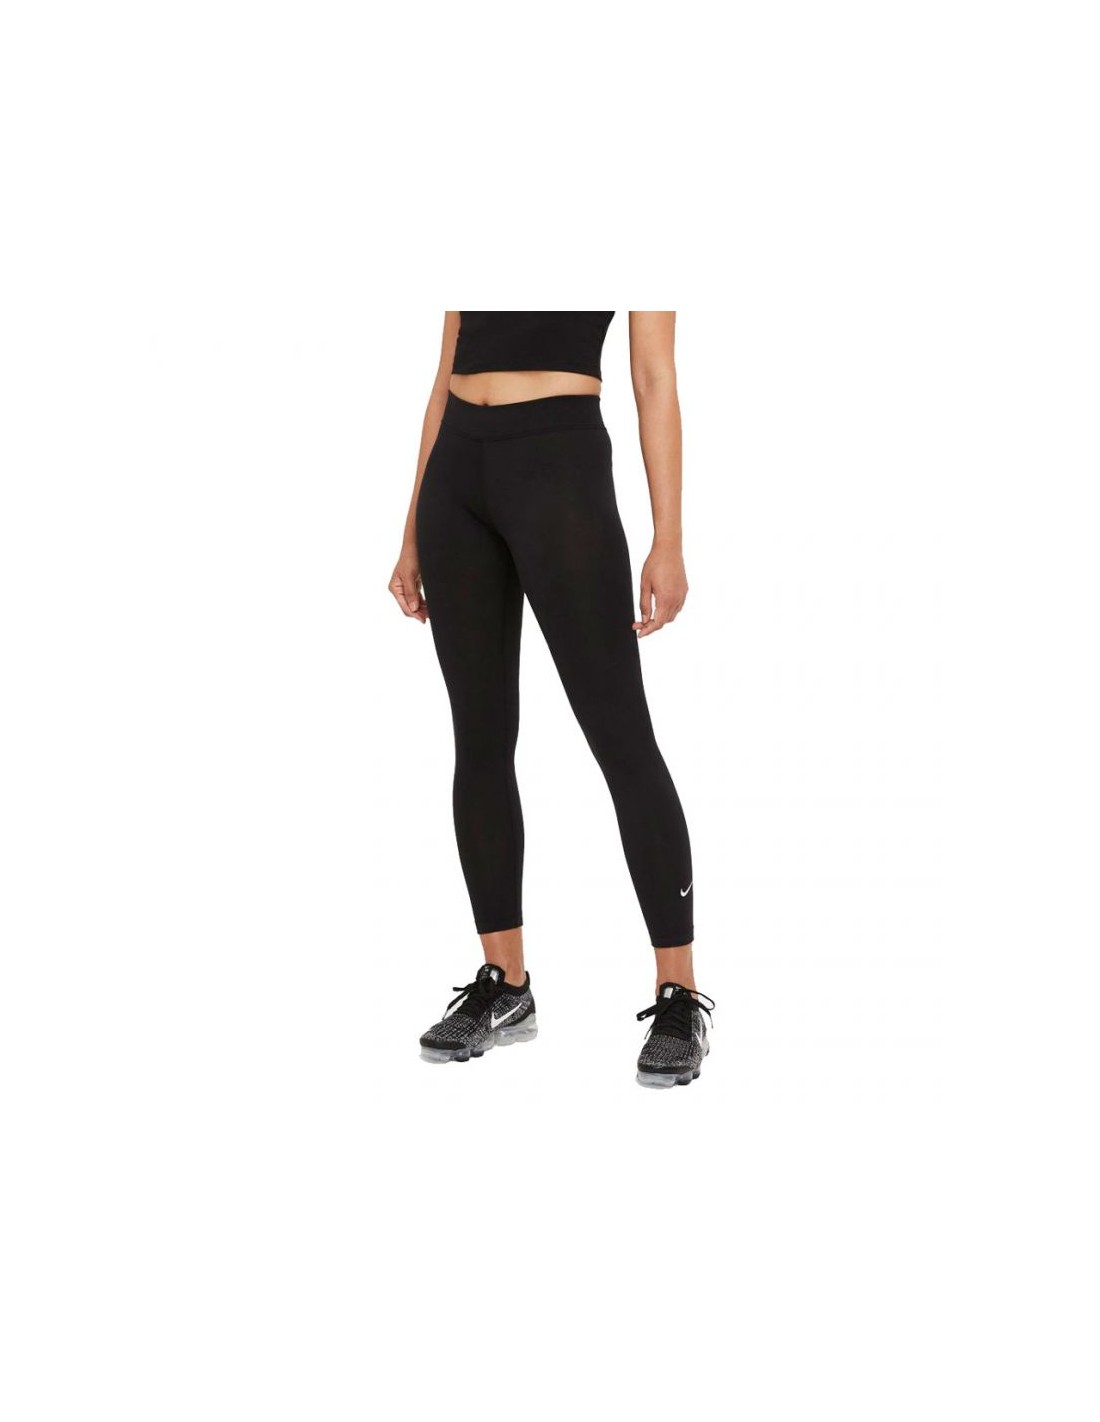 Sport leggings for Women NSW ESSNT 7/8MR LGGNG Nike CZ8532 063 Grey